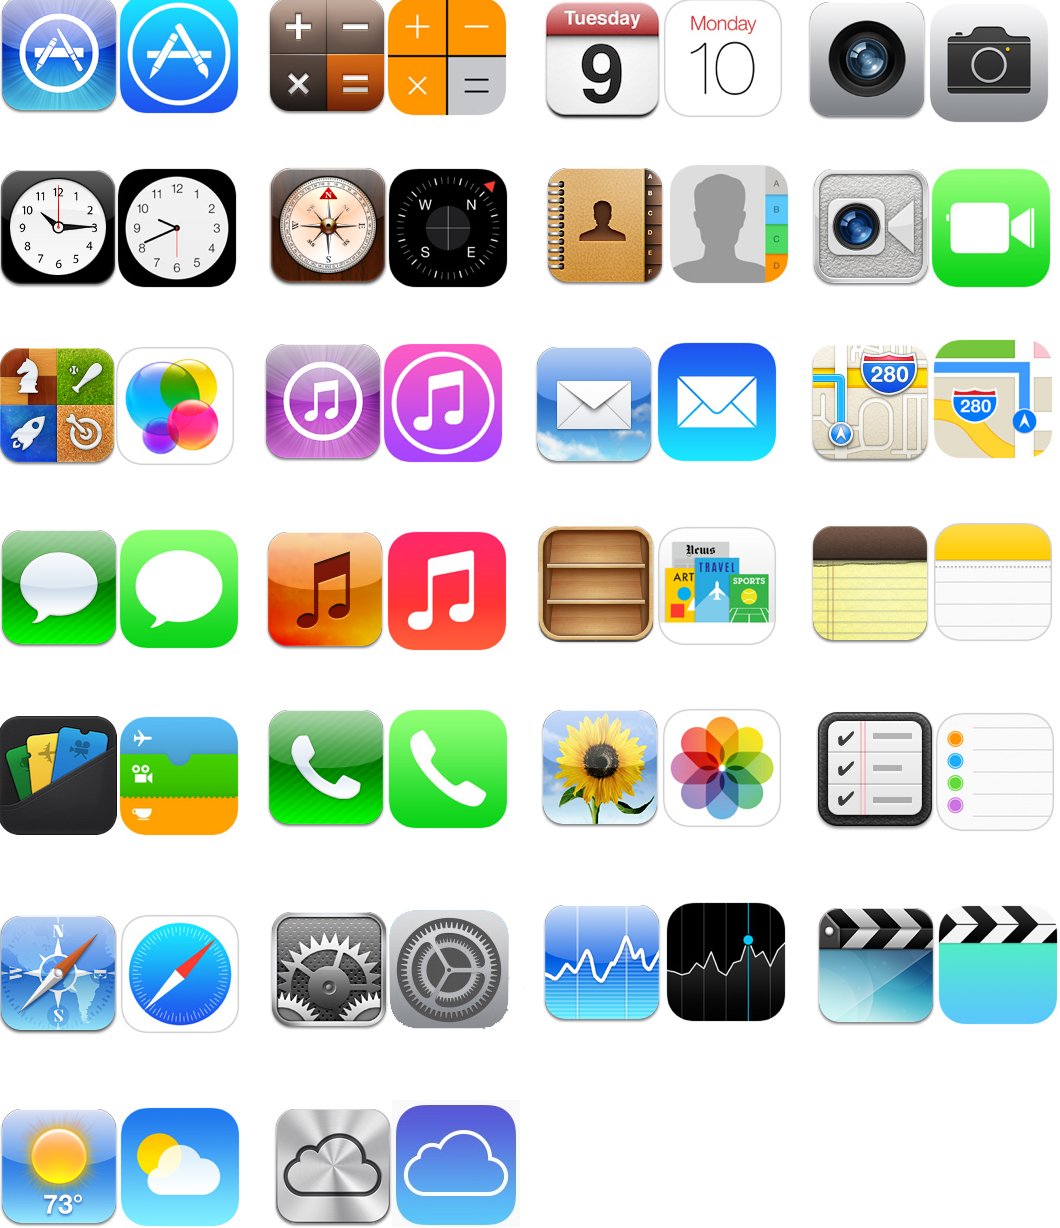 13 App Icon Ios Images Iphone App Icon Ios 7 Ios 8 App Icons And Ios App Icon Designs Newdesignfile Com